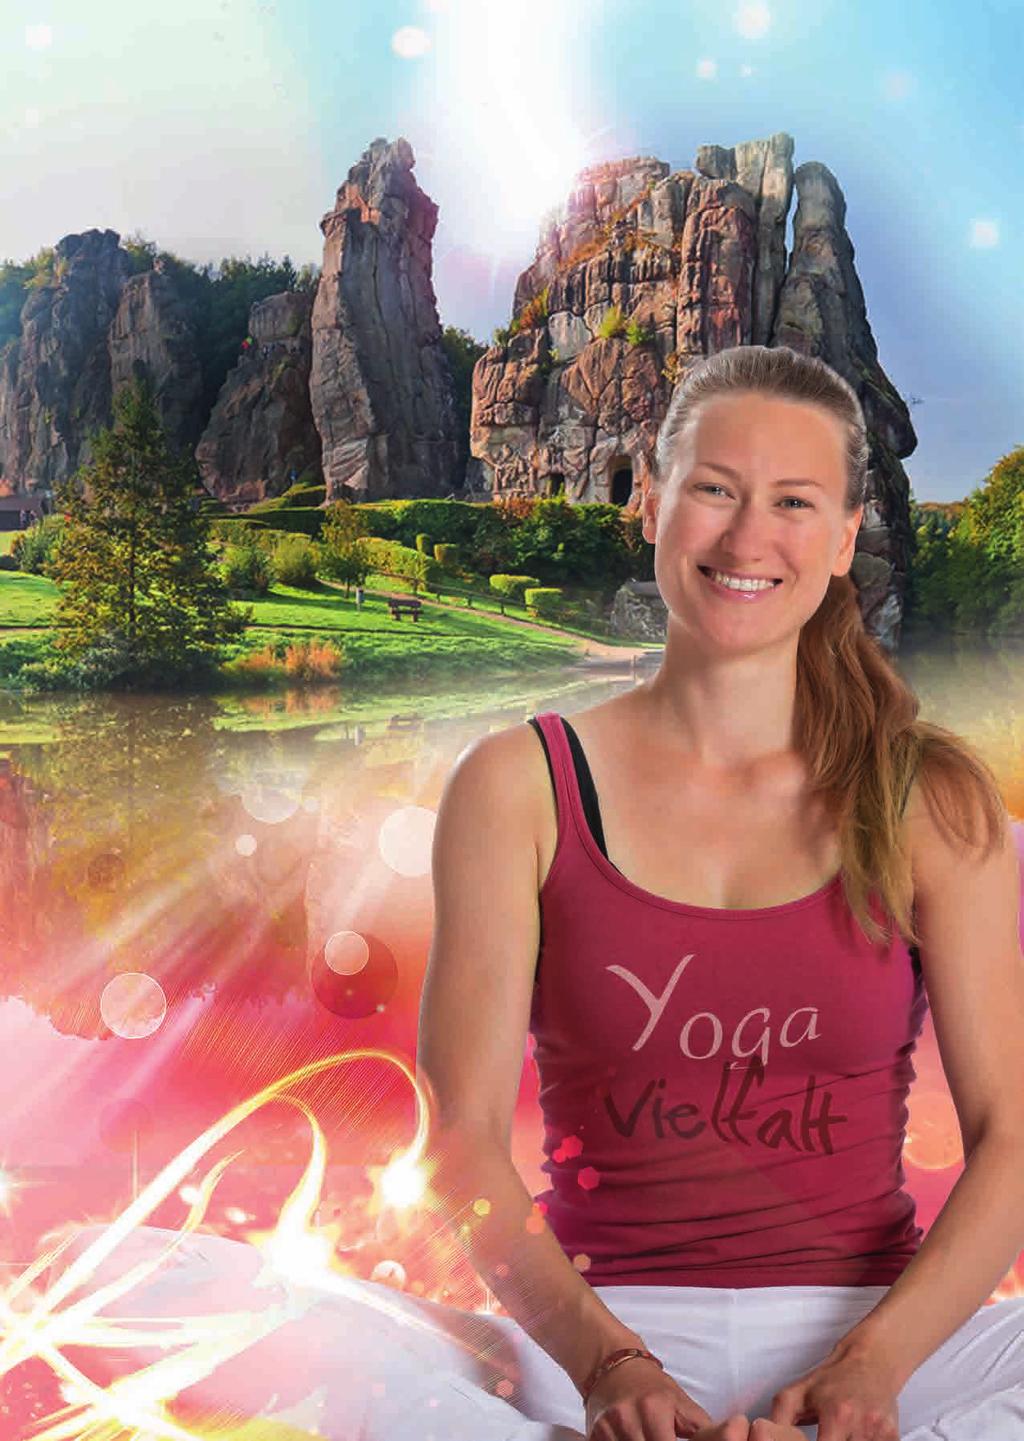 YOGA VIDYA Bad Meinberg Seminarprogramm Yogaweg 7 32805 Horn-Bad Meinberg Tel. 0234 / 87-0, Fax -20 info@yoga-vidya.de yoga-vidya.